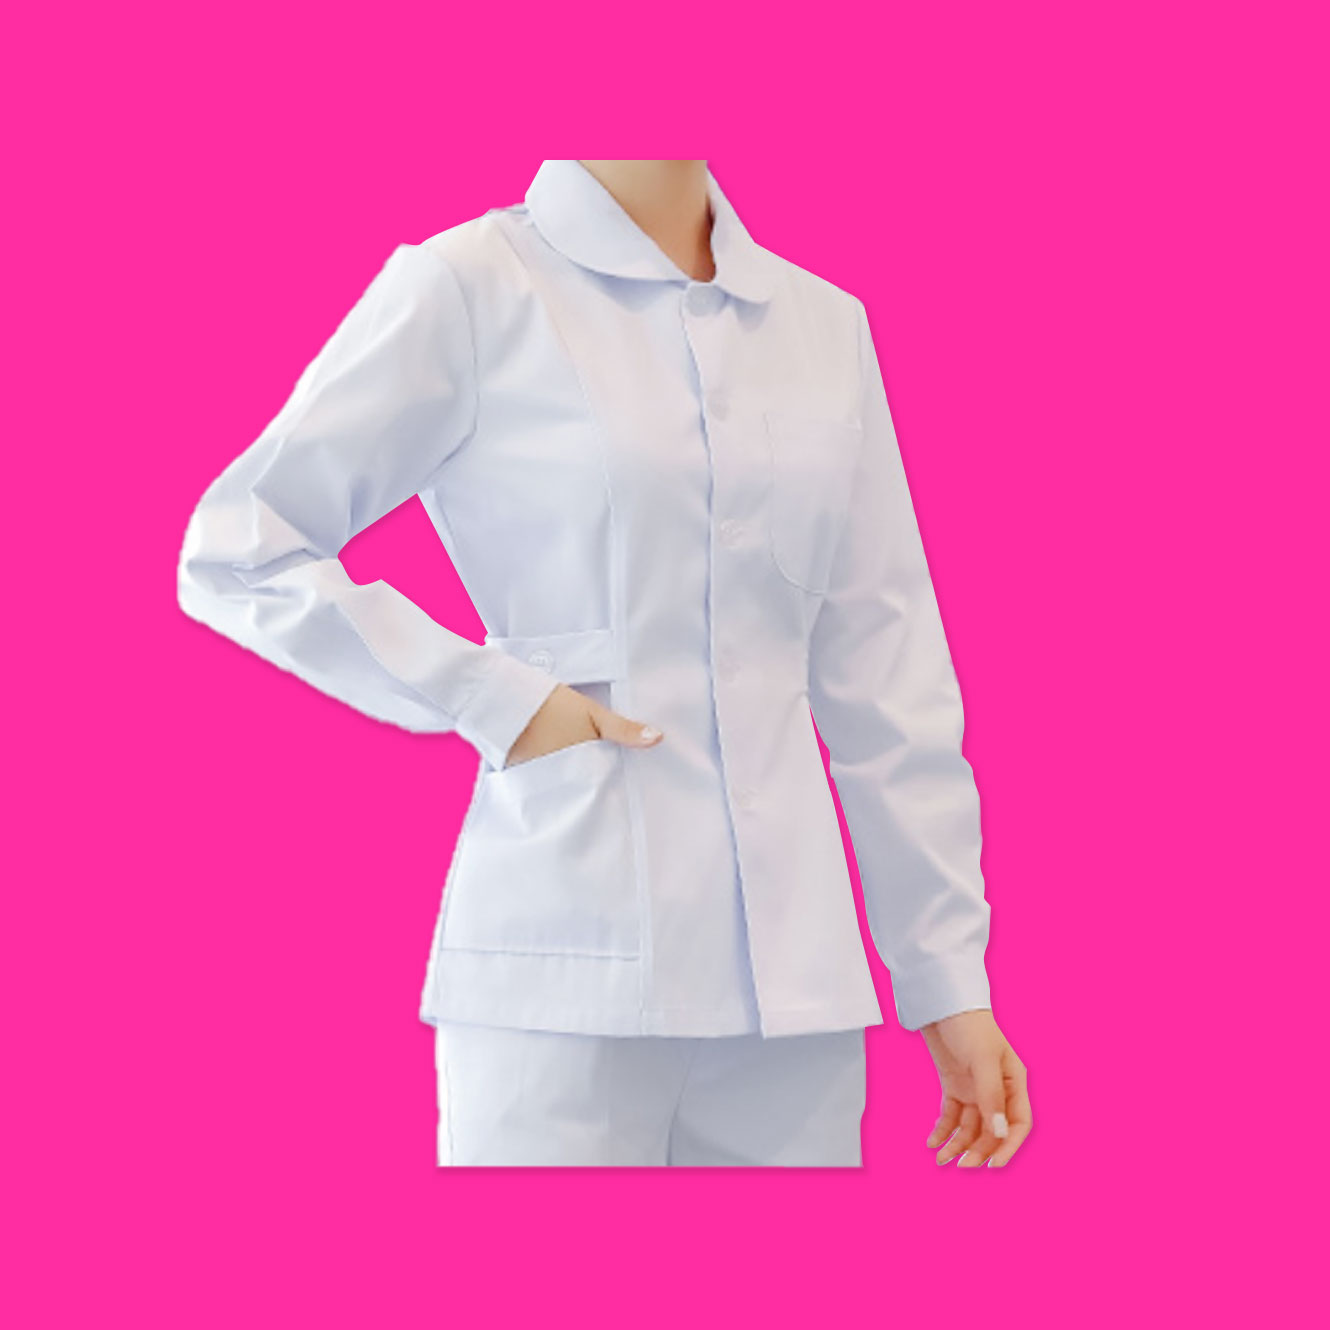 https://bigbanner.com.au/wp-content/uploads/2020/02/Nurse-Uniform-3.jpg